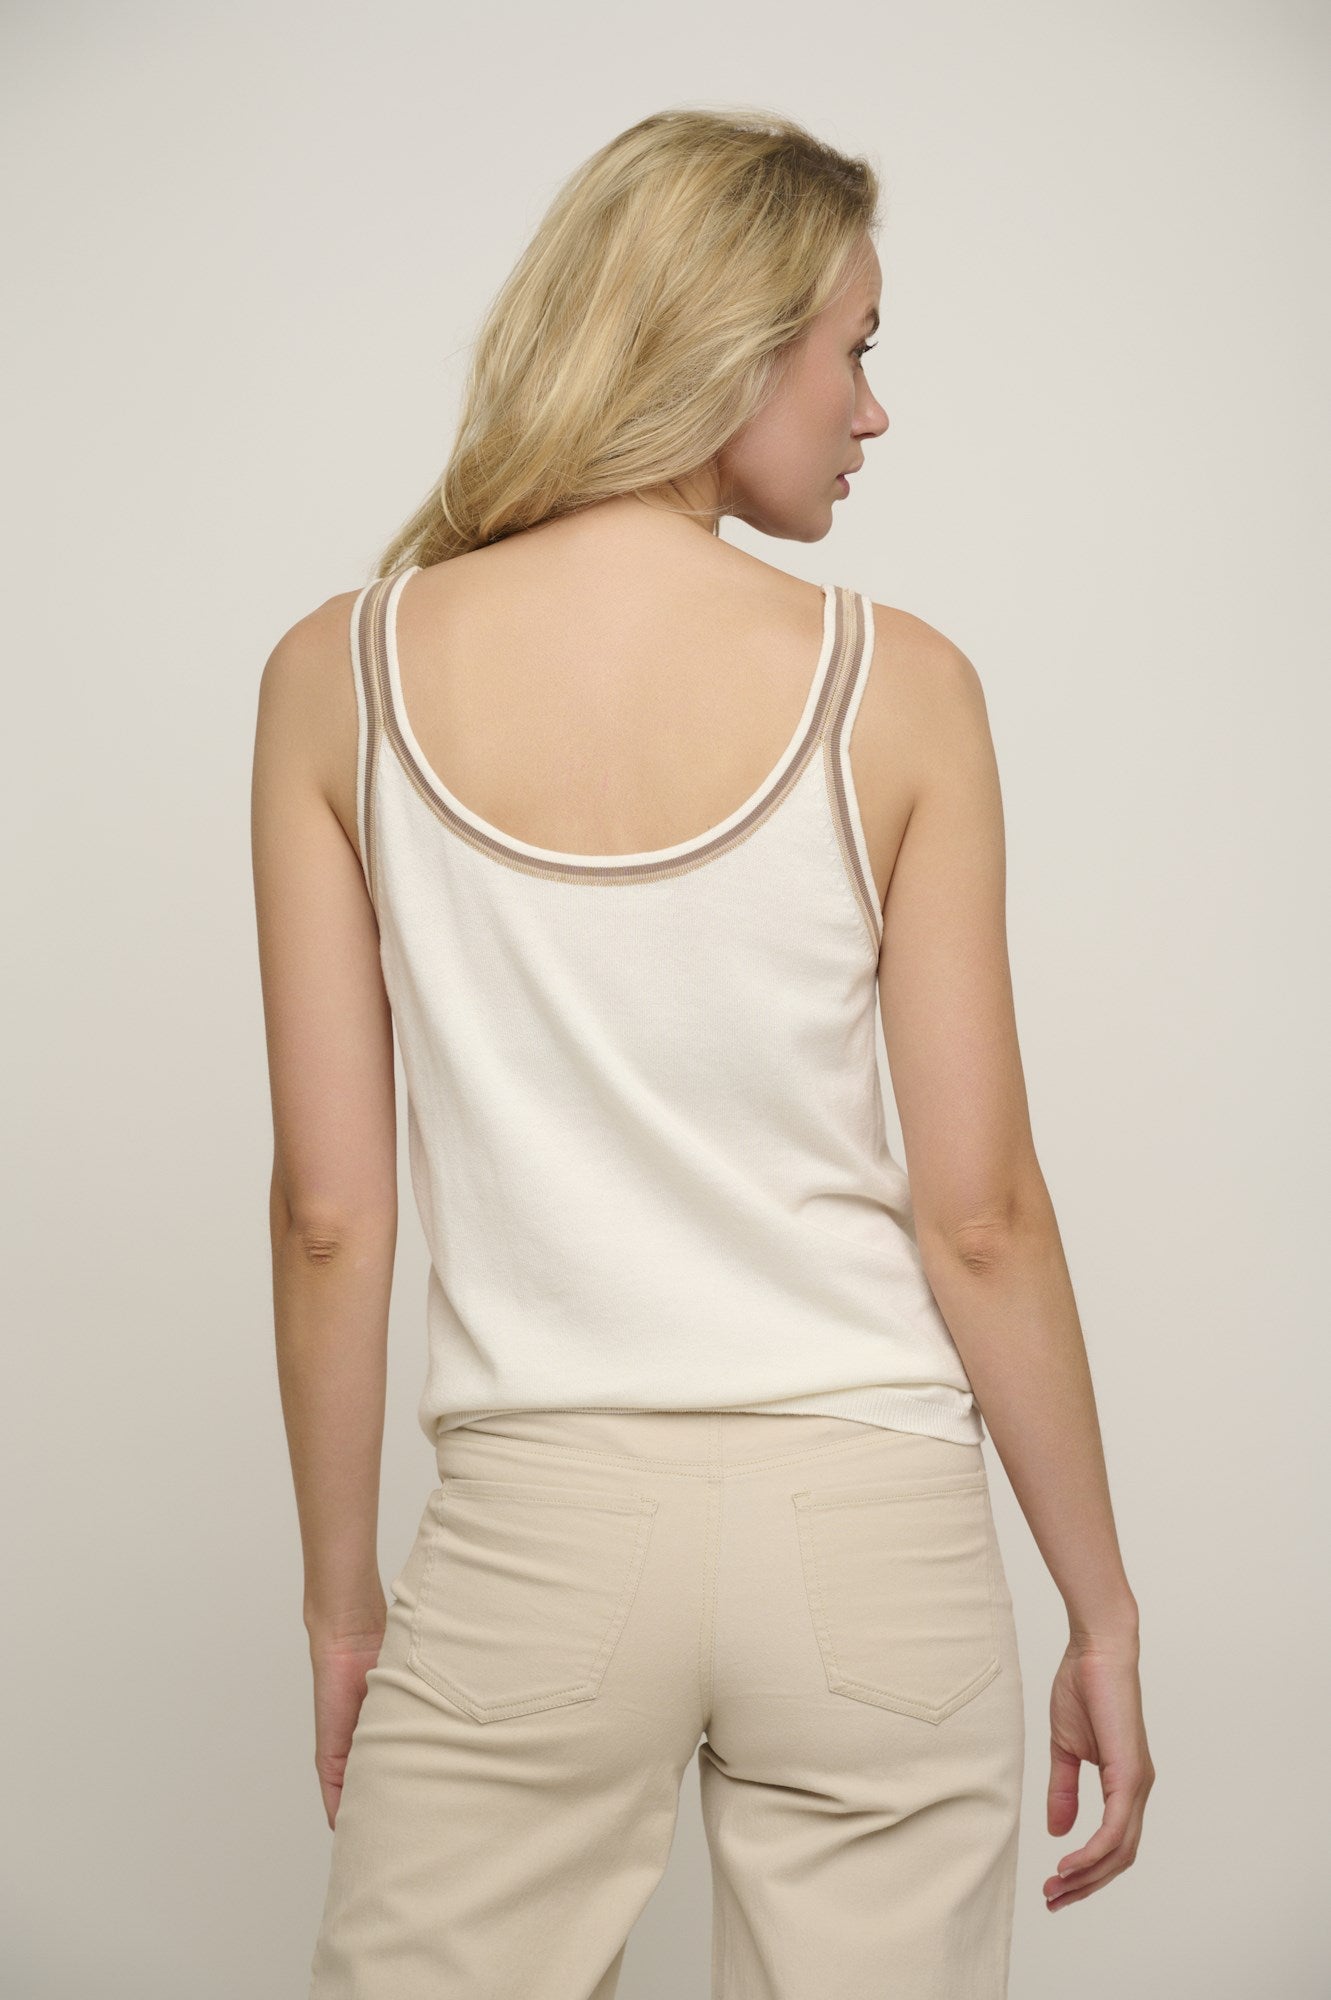 Rino & Pelle Saap strappy contrast edge camisole